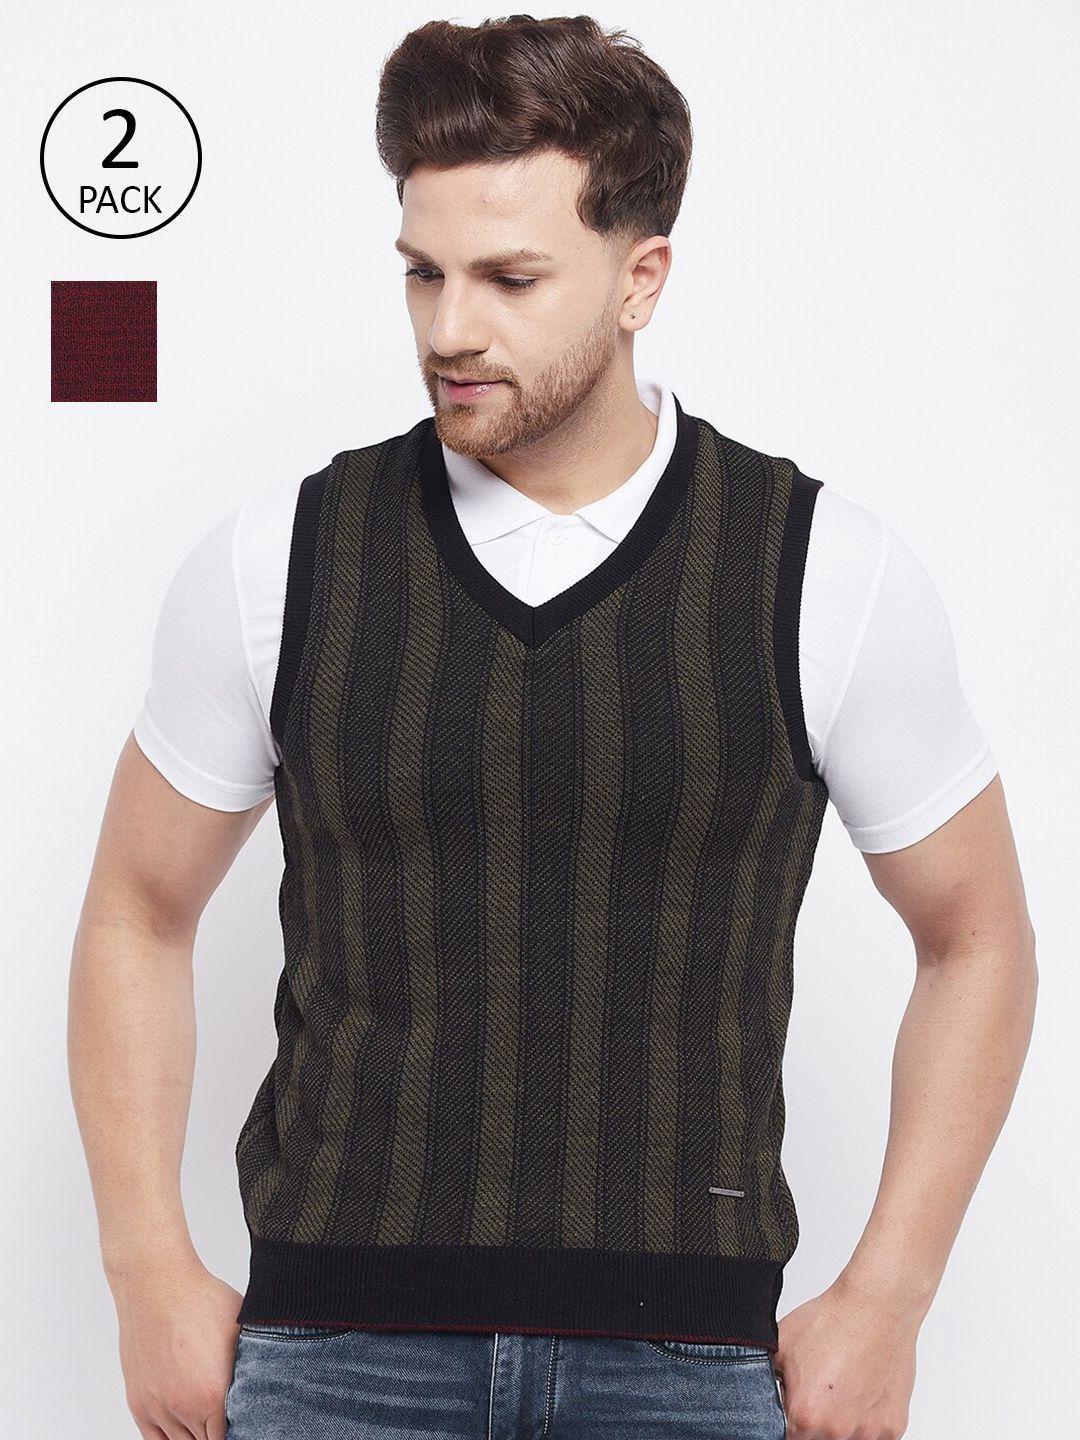 duke men pack of 2 black & maroon striped wool sweater vest